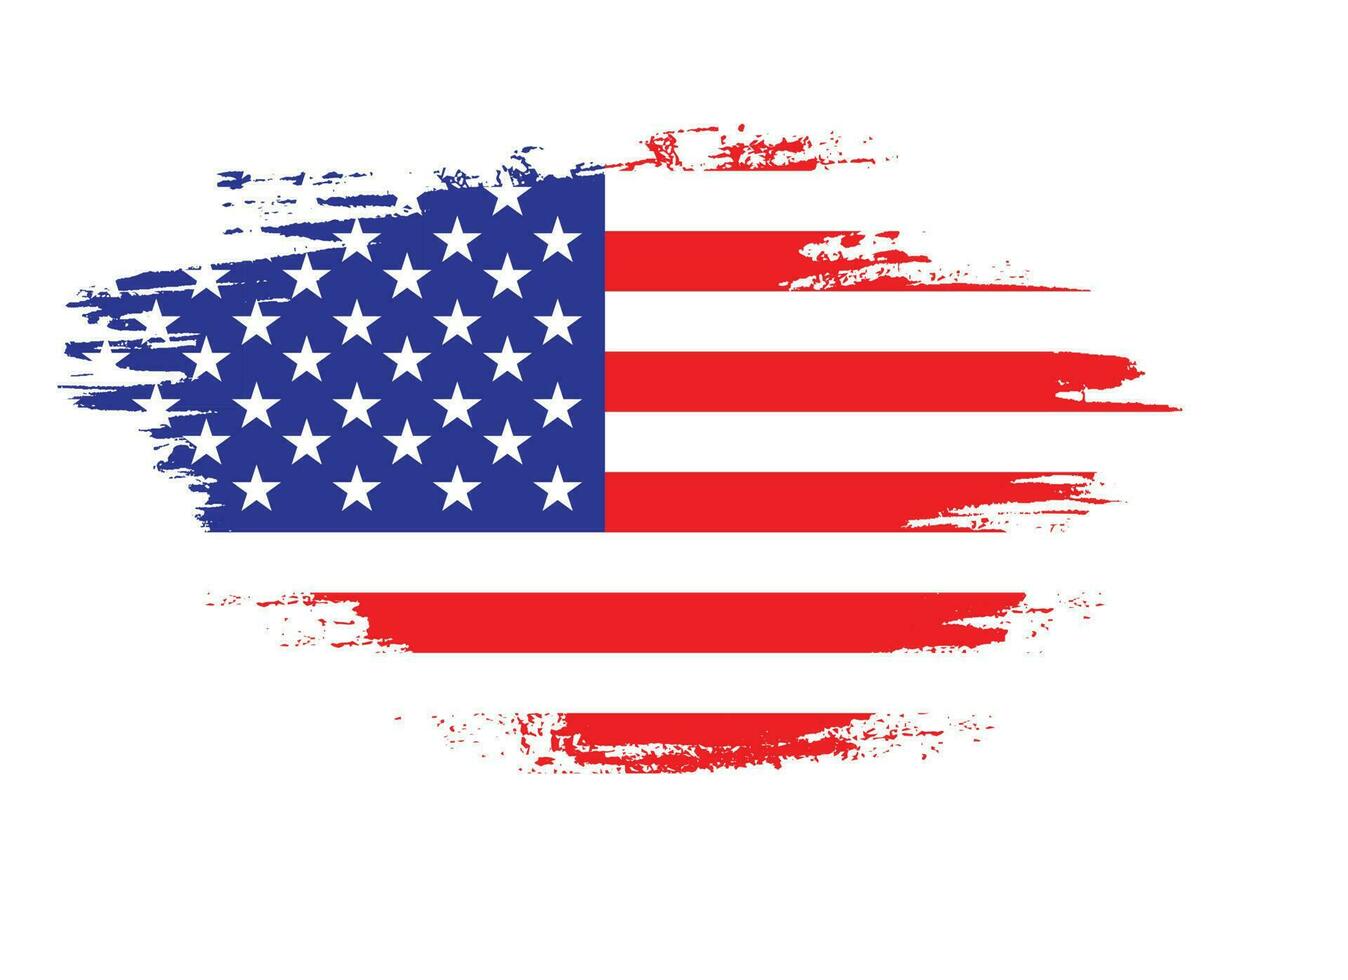 Abstract brush stroke USA flag vector image